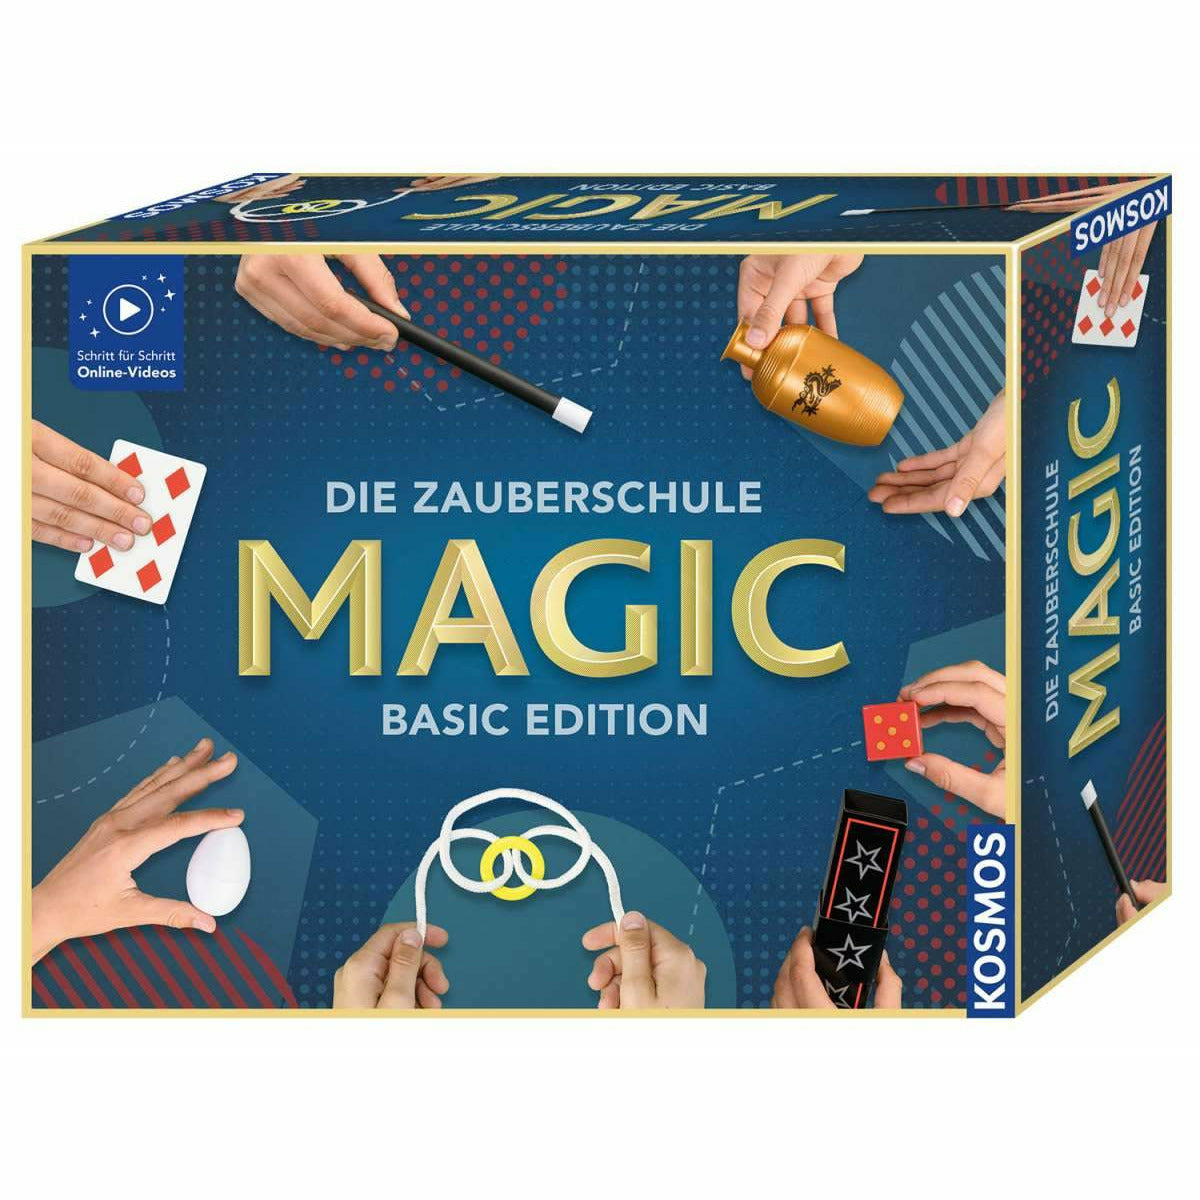 Die Zauberschule Magic - Basic Edition